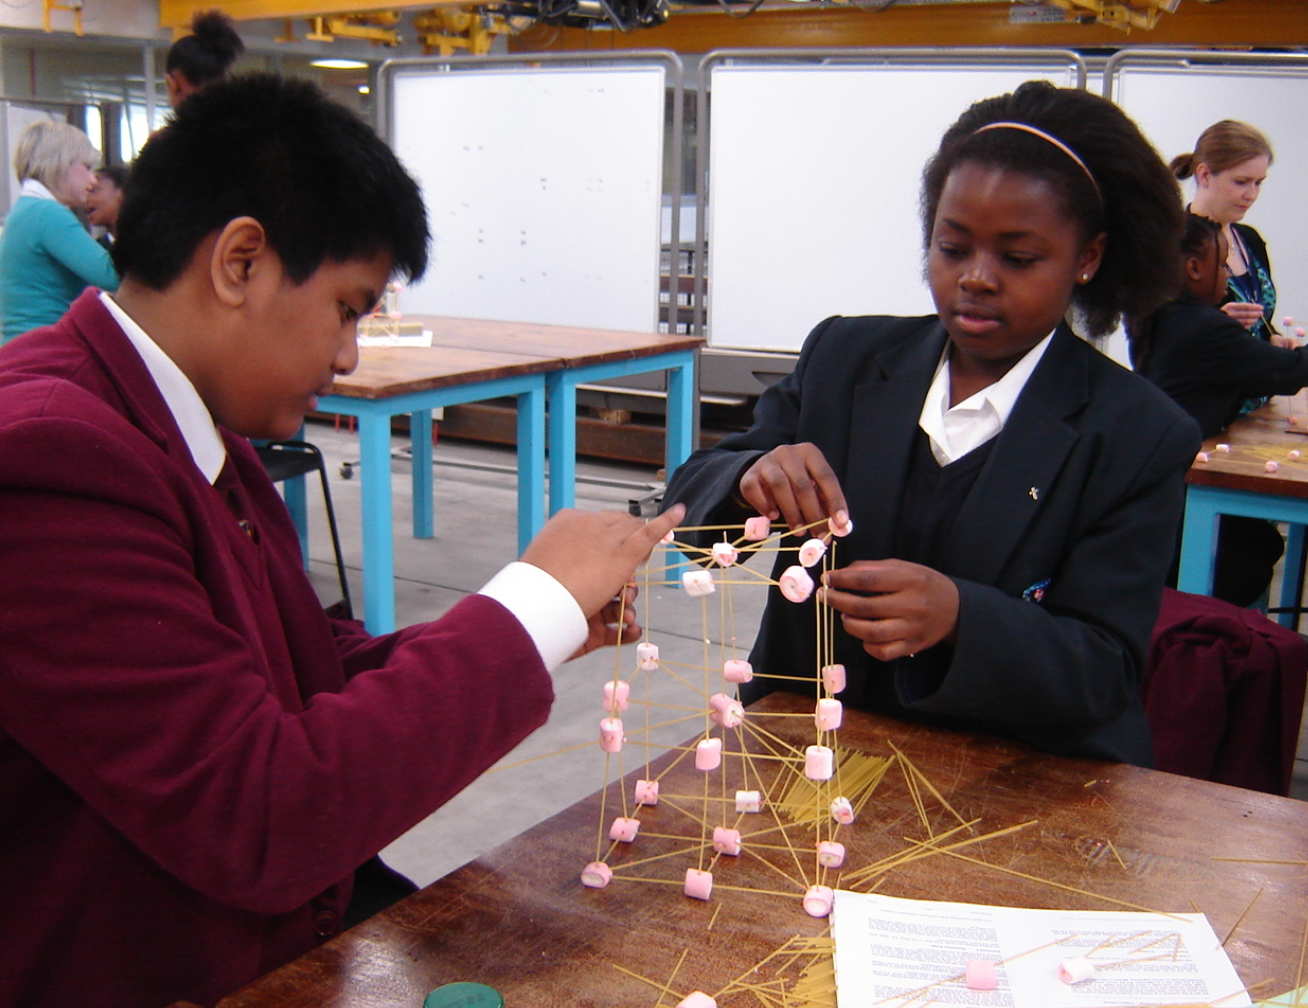 Students build bridges using spaghetti at Creative Futures workshop